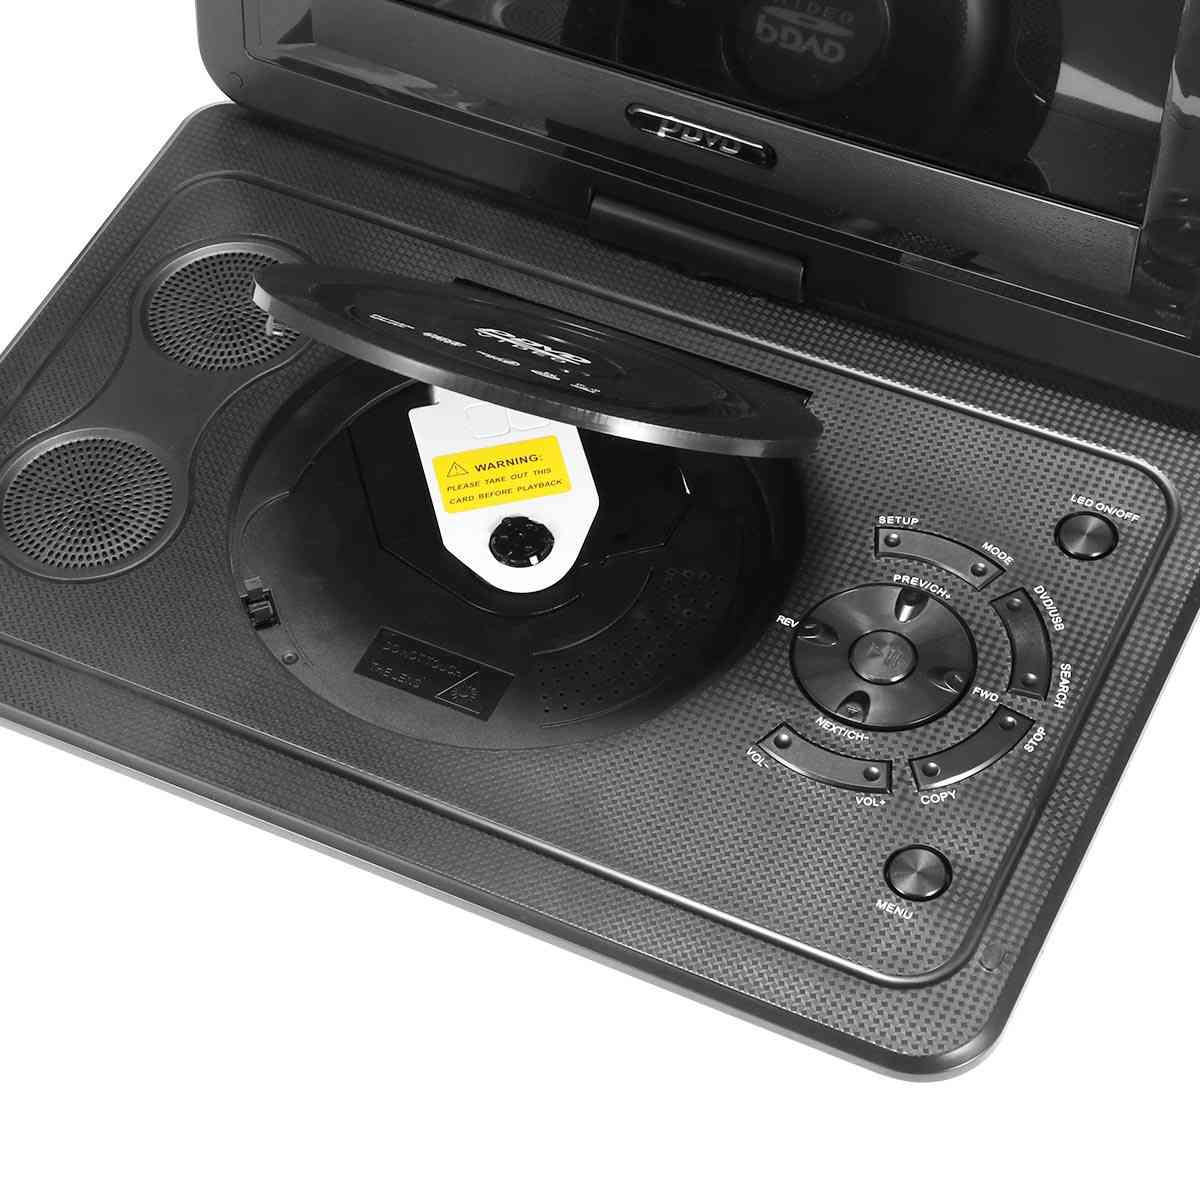 Portable Car Dvd Player